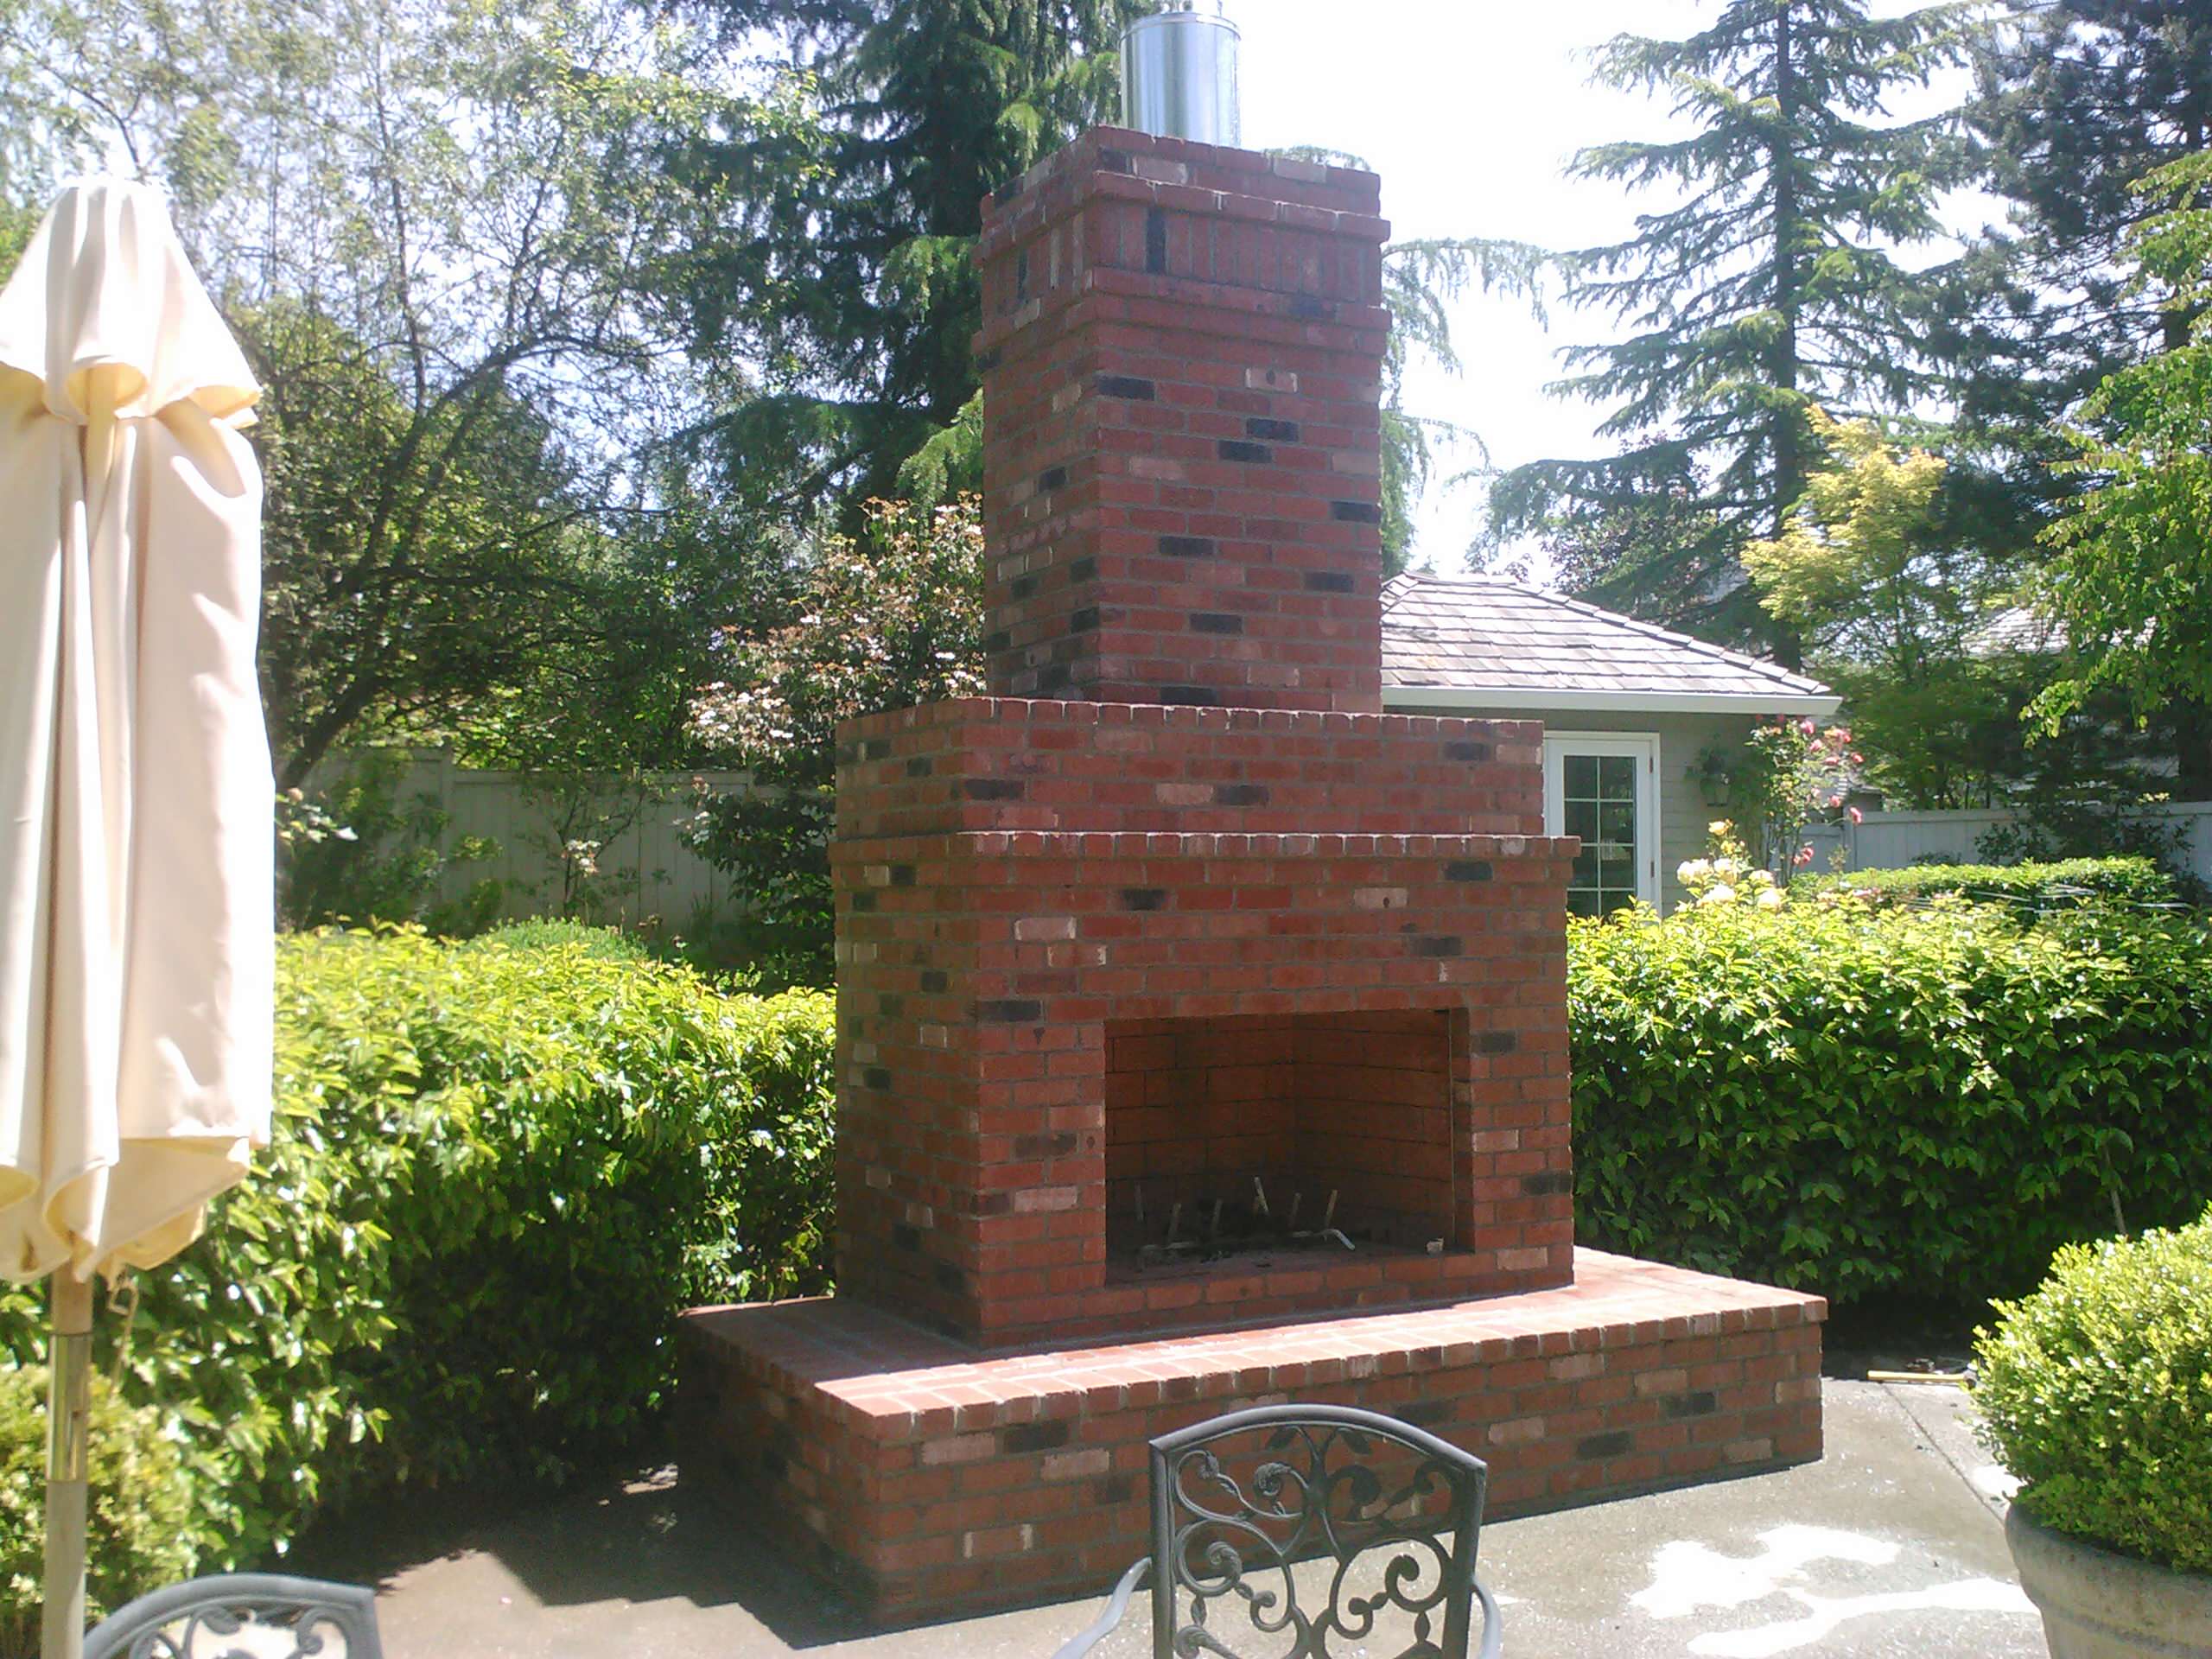 Outdoor Brick Fireplace Houzz, Outdoor Red Brick Fireplace Ideas